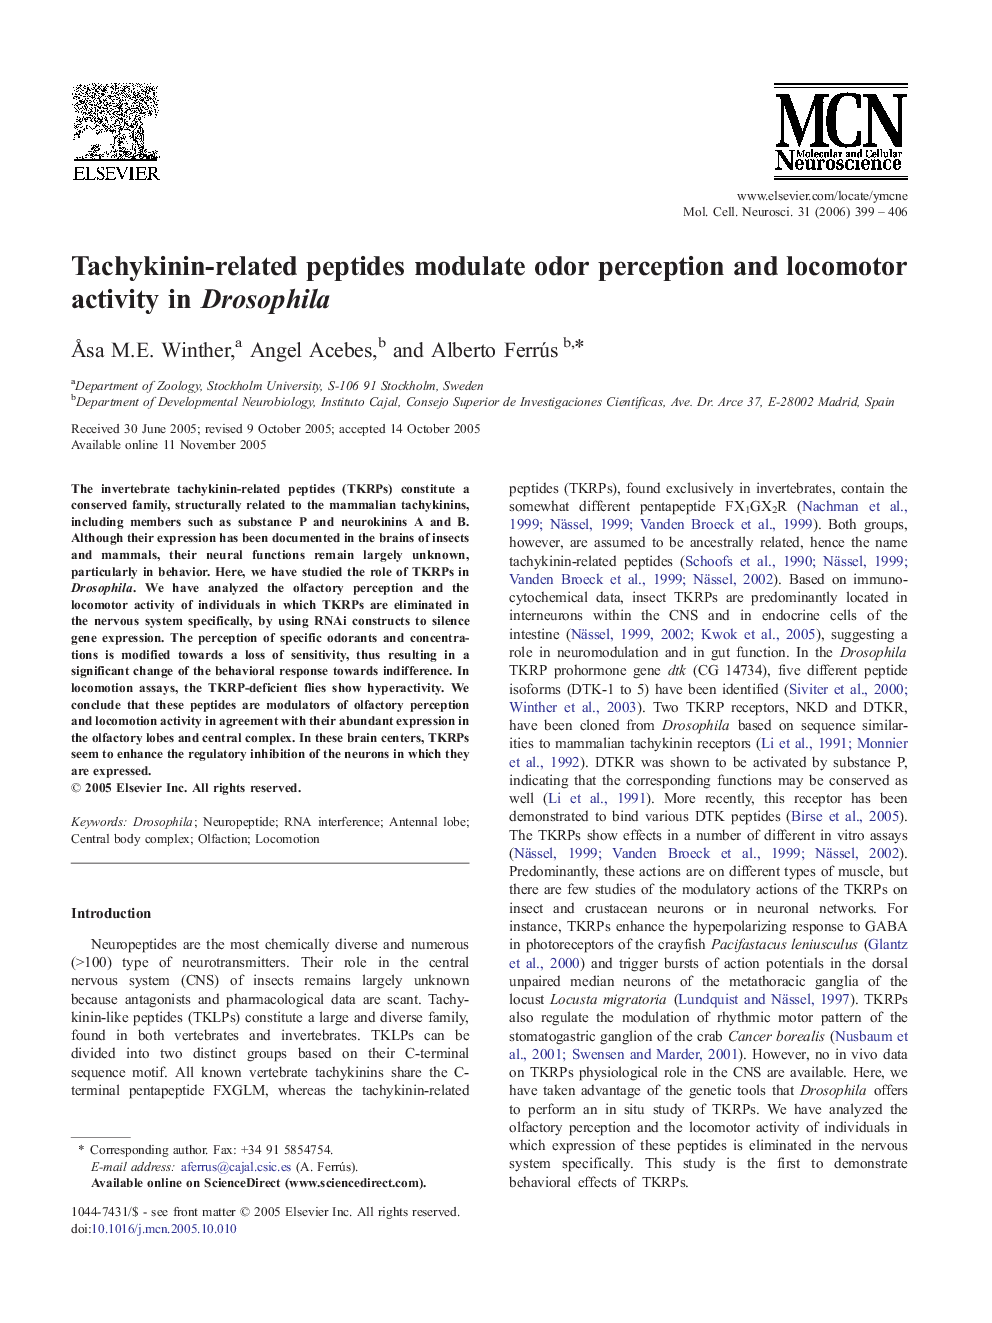 Tachykinin-related peptides modulate odor perception and locomotor activity in Drosophila